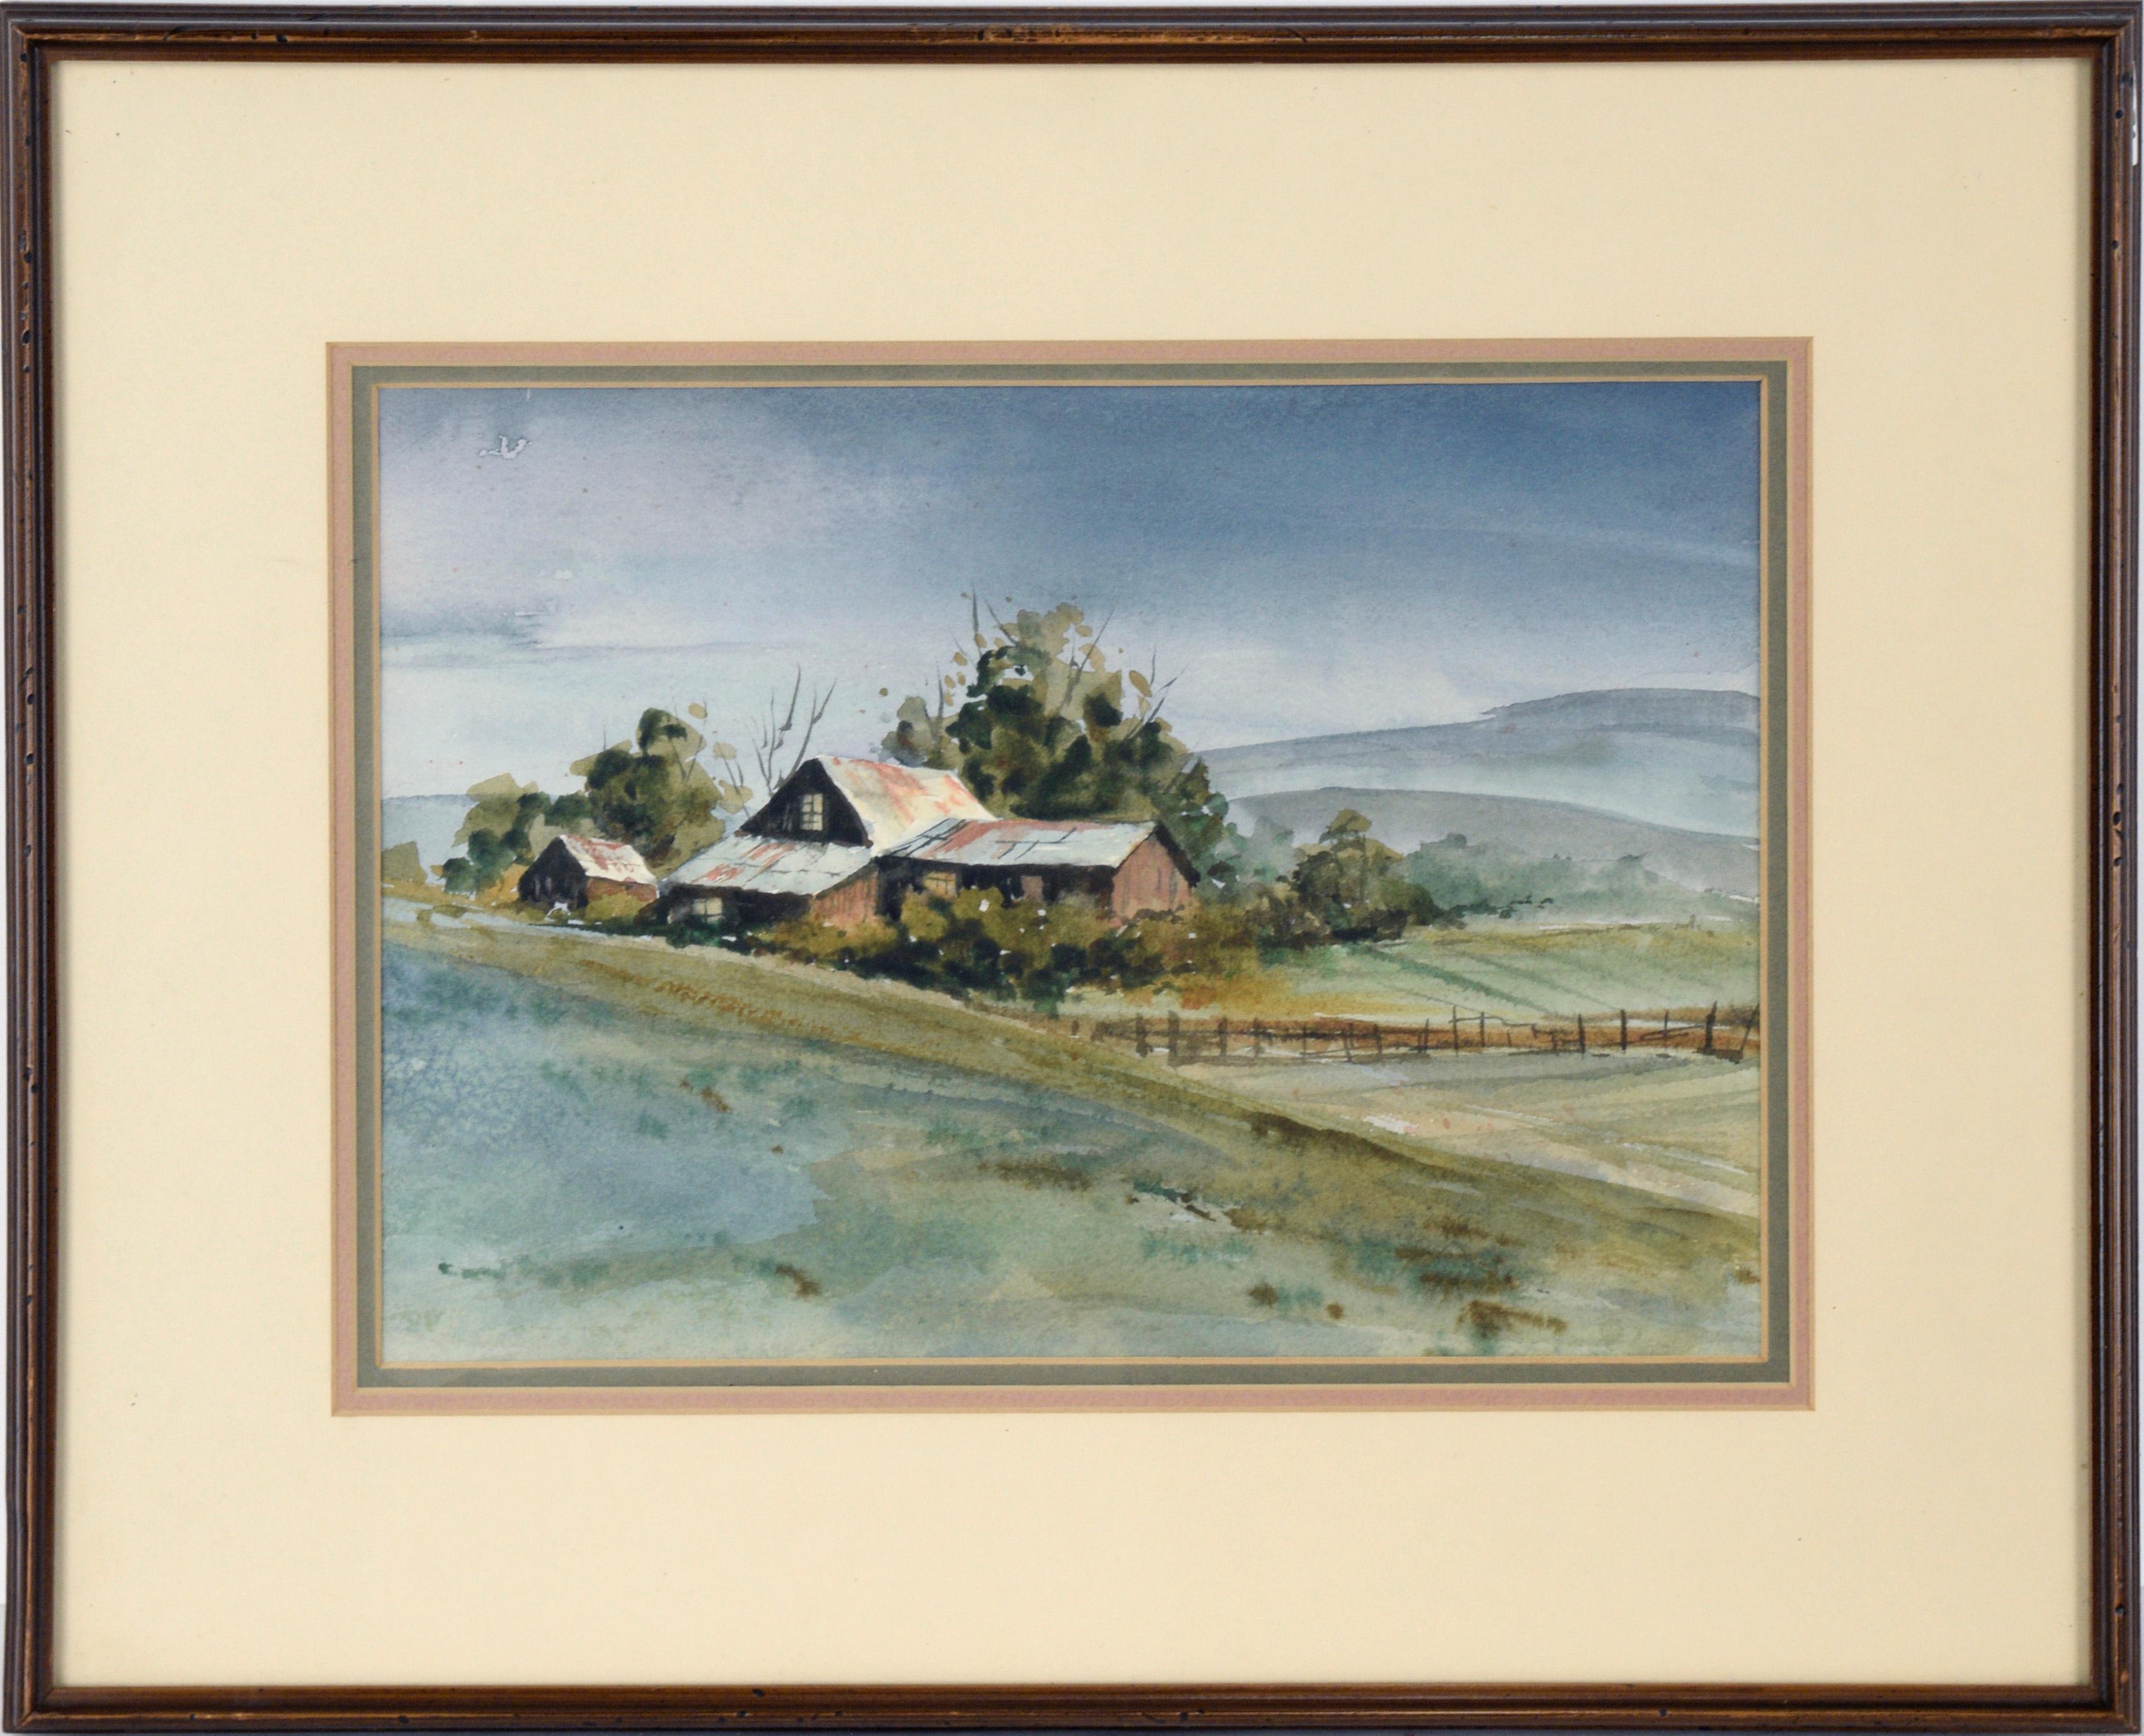 Alice Duke Landscape Art - Farmhouse Amador Foothills - Rural California Landscape in Watercolor on Paper